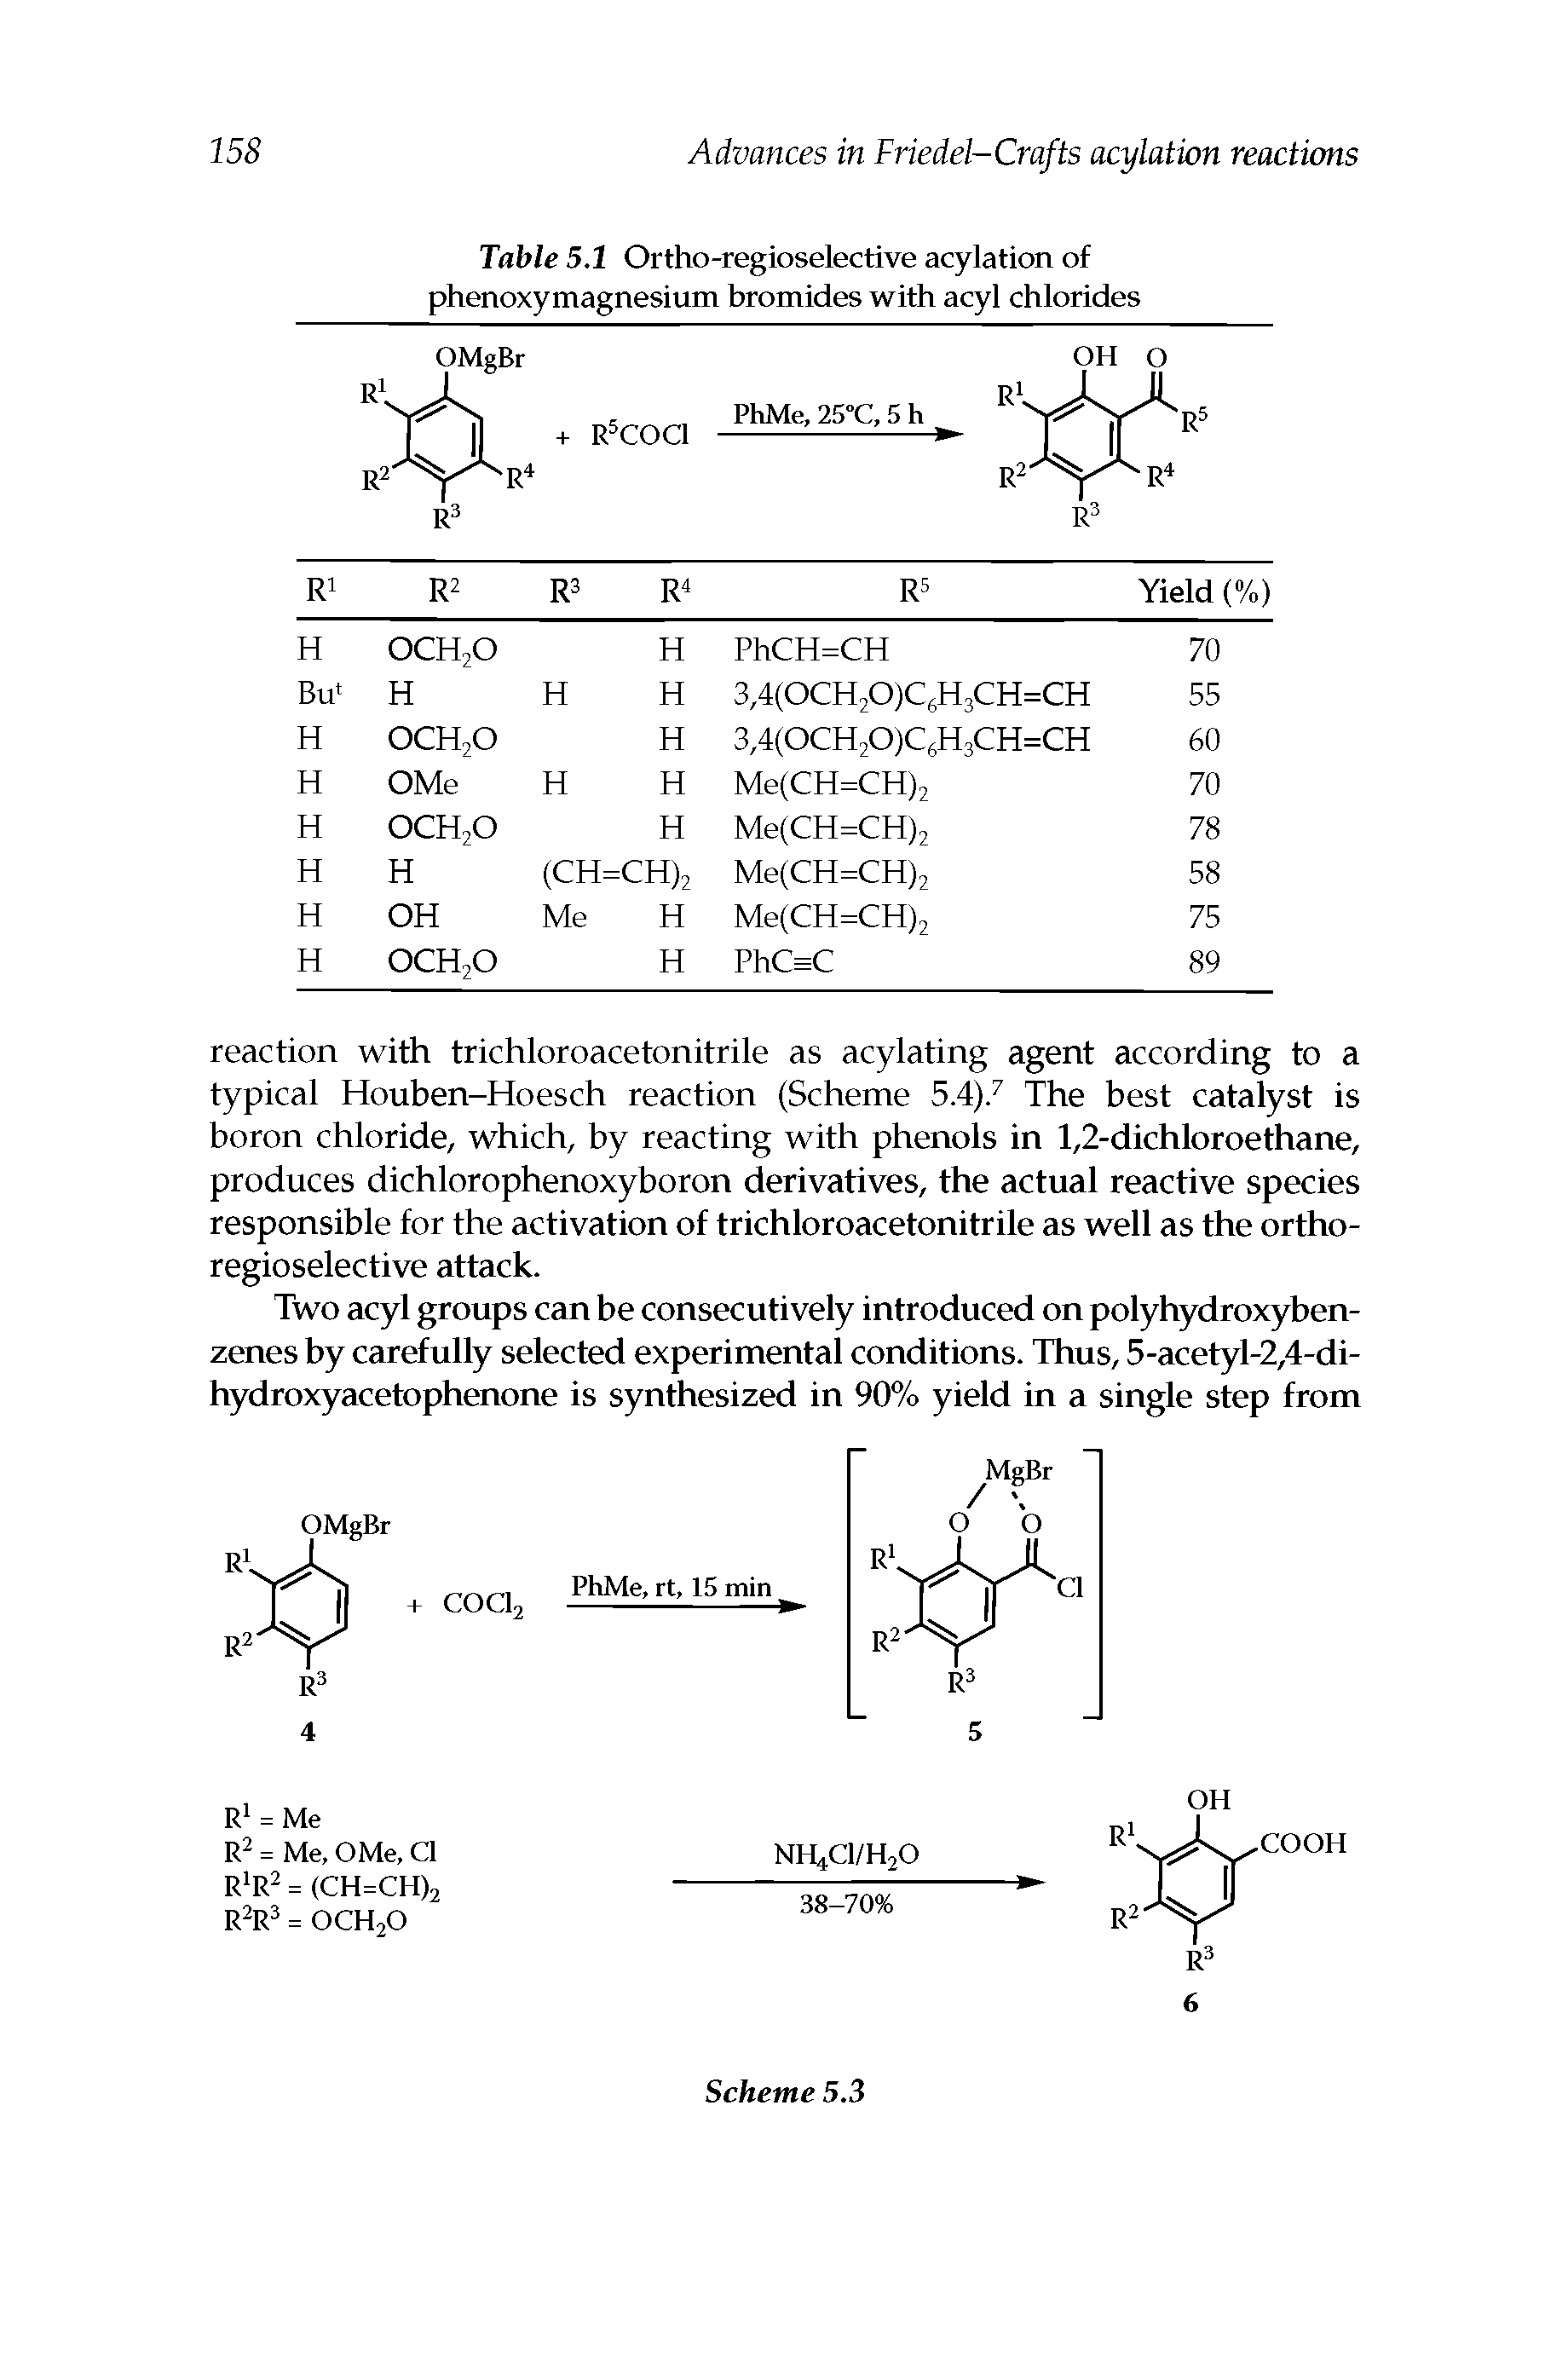 Table 5.1 Ortho-regioselective acylation of phenoxymagnesium bromides with acyl chlorides...